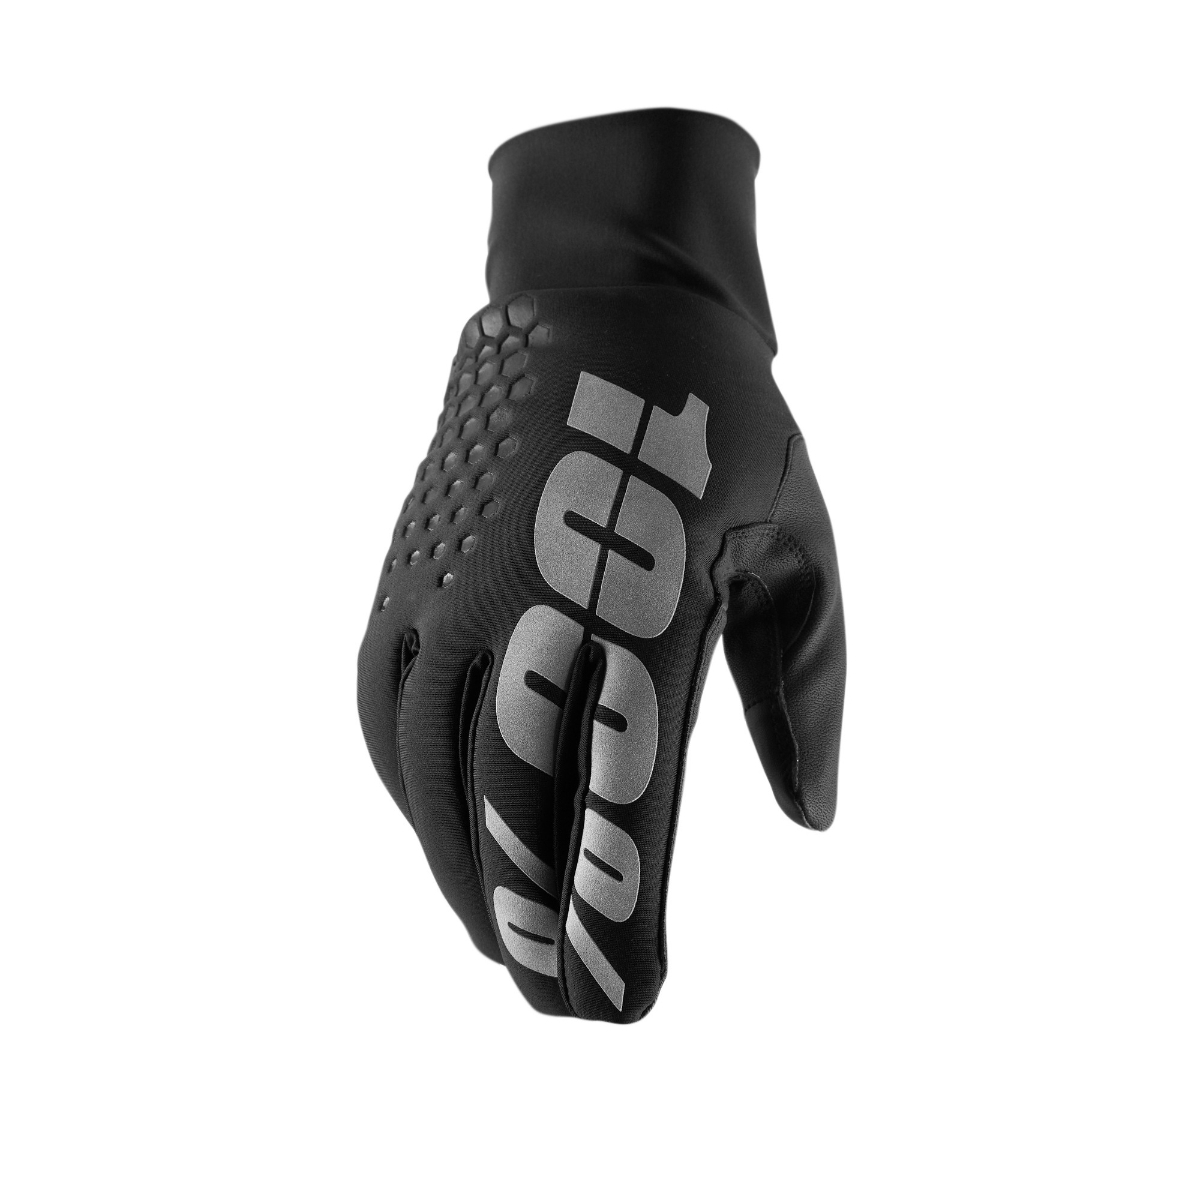 2XLサイズ 100% HYDROMATIC BRISKER MX オフロード グローブ 手袋 ブラック 黒 2X